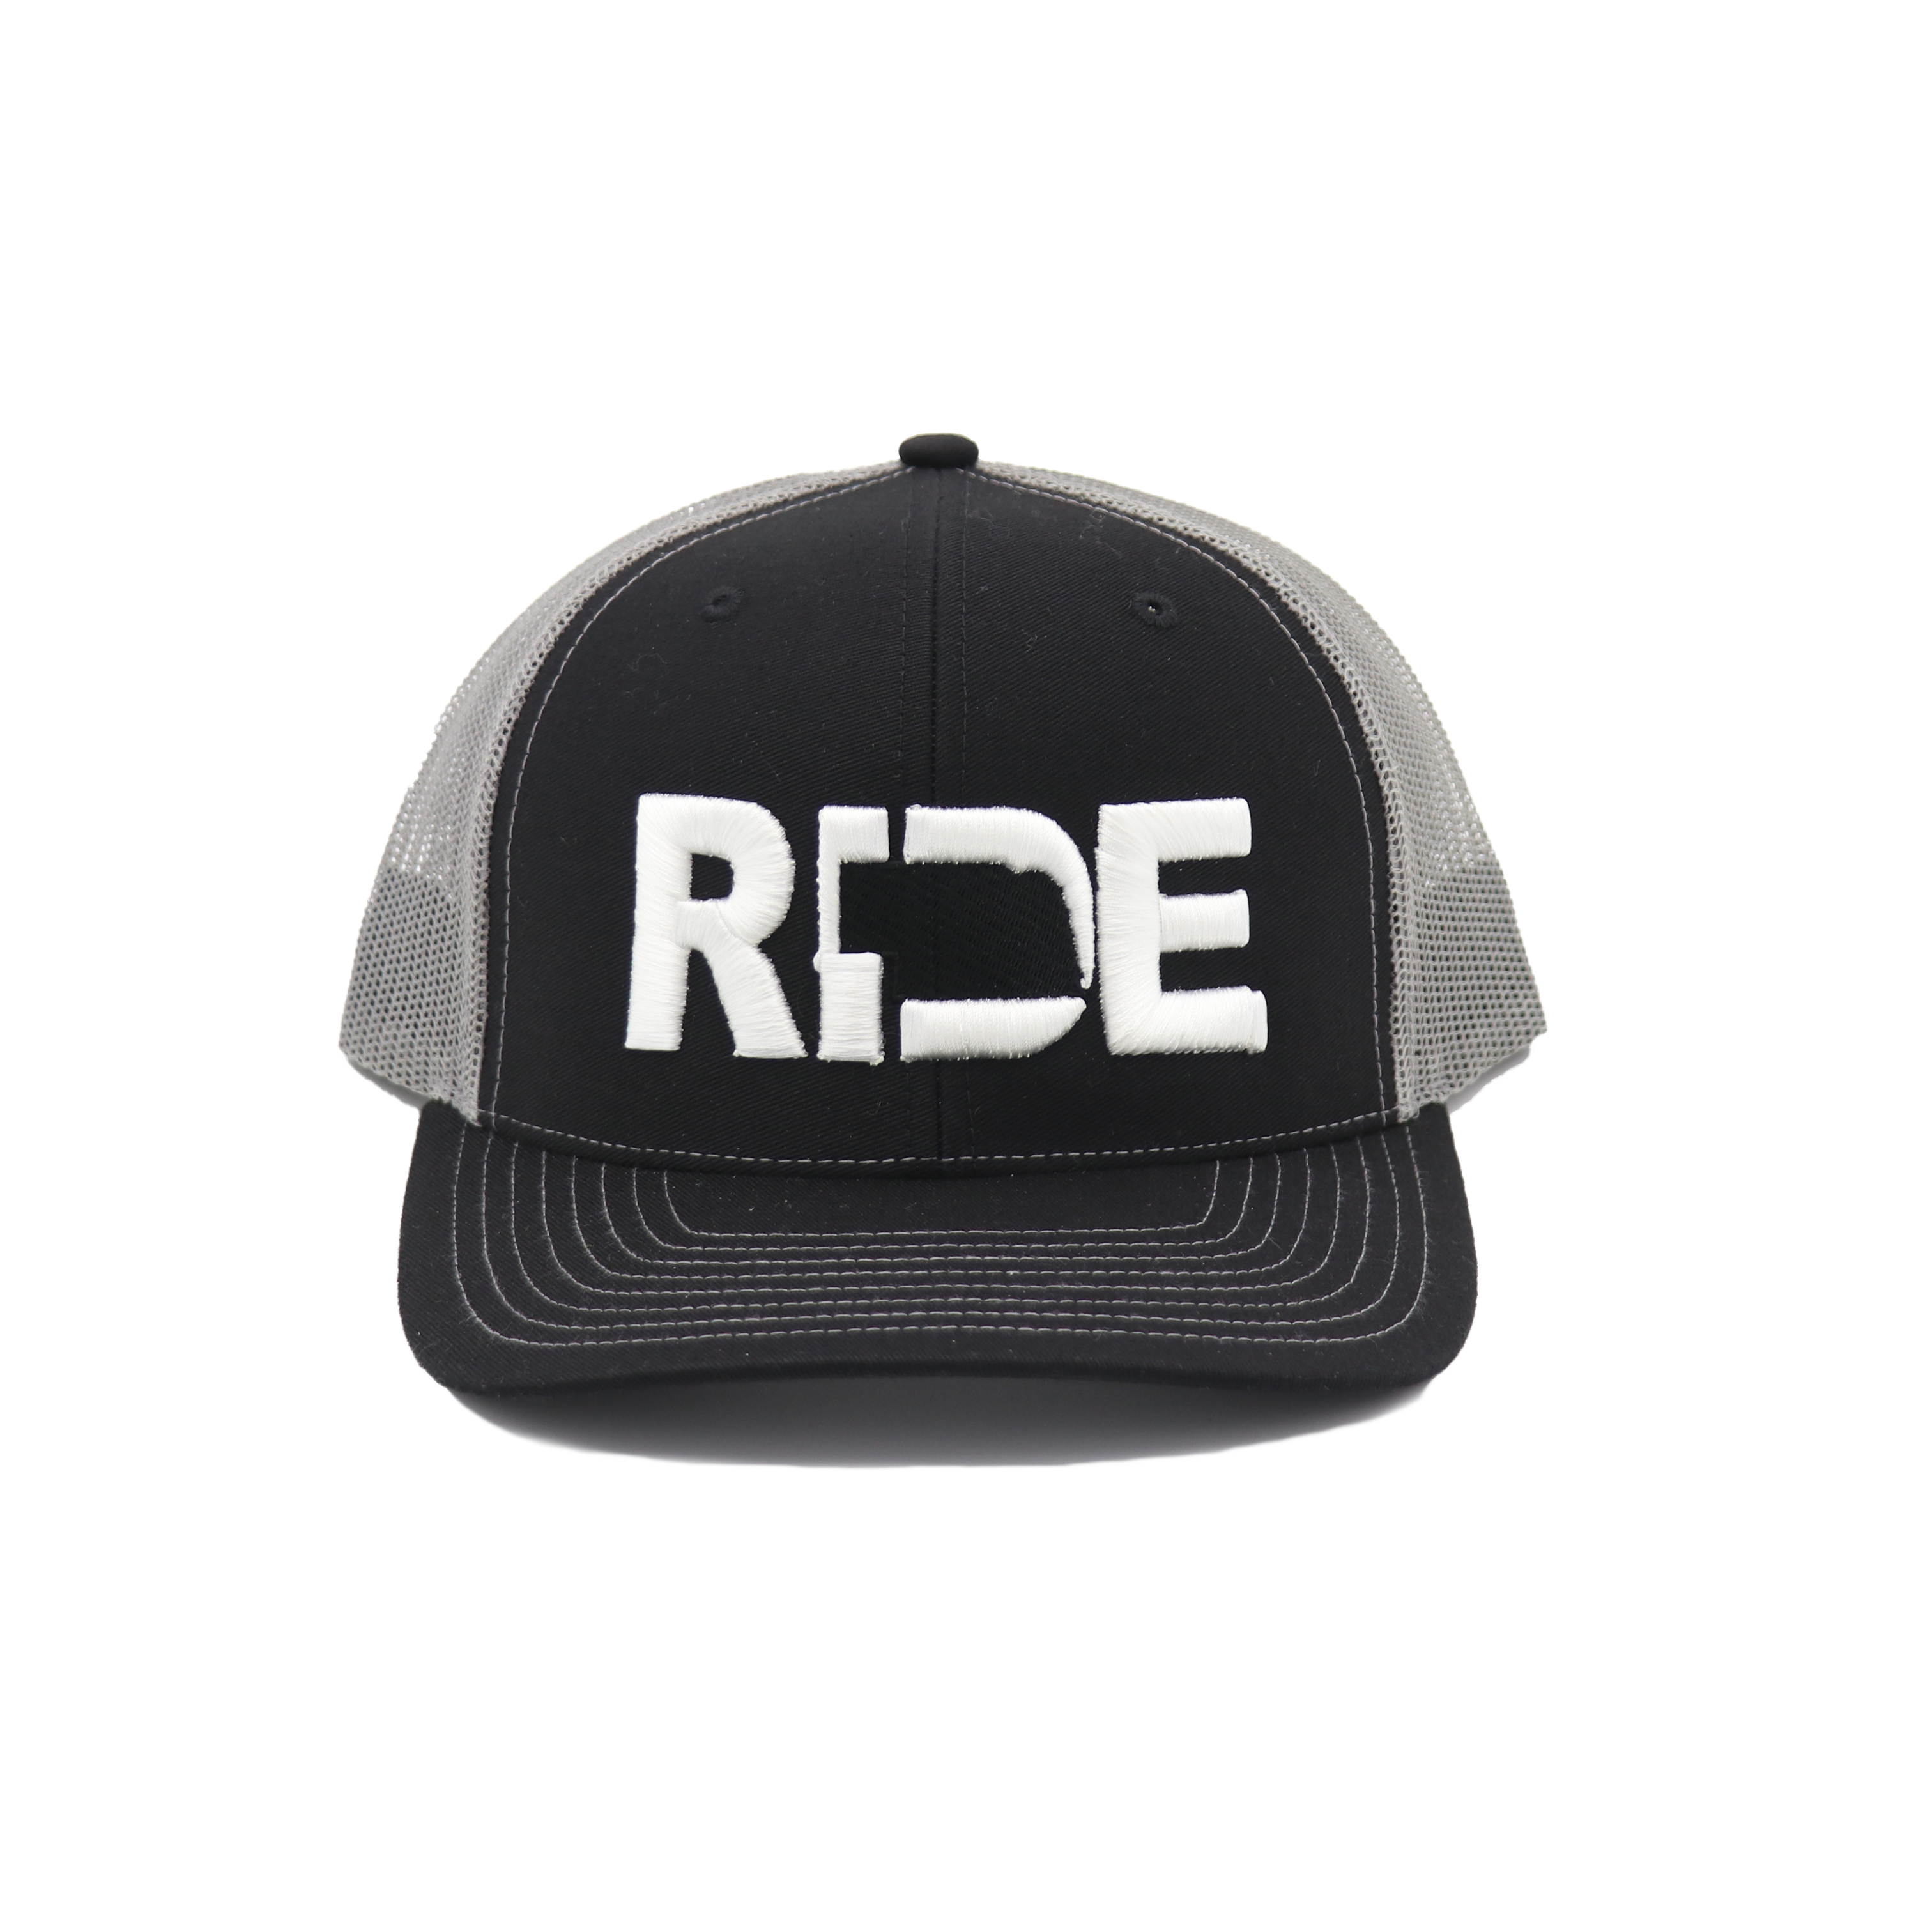 Ride Nebraska Classic Embroidered Snapback Trucker Hat Black/Charcoal